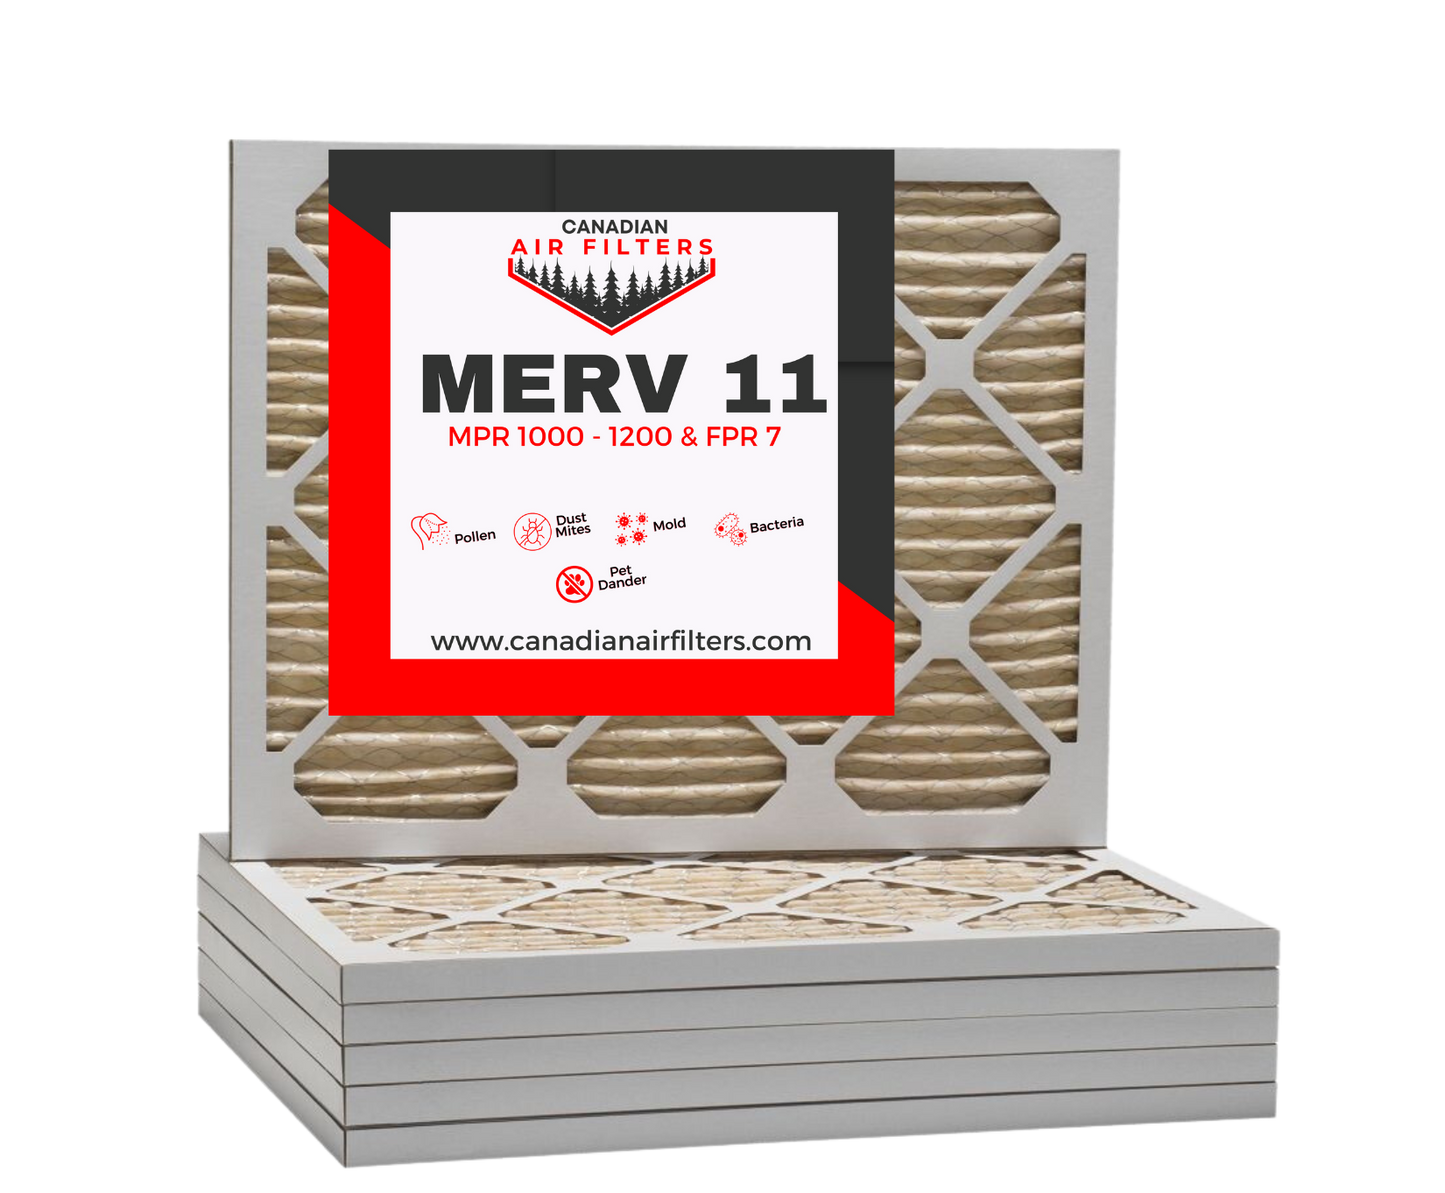 9.7 x 13.4 x 2 MERV 11 Pleated Air Filter (06 pack)